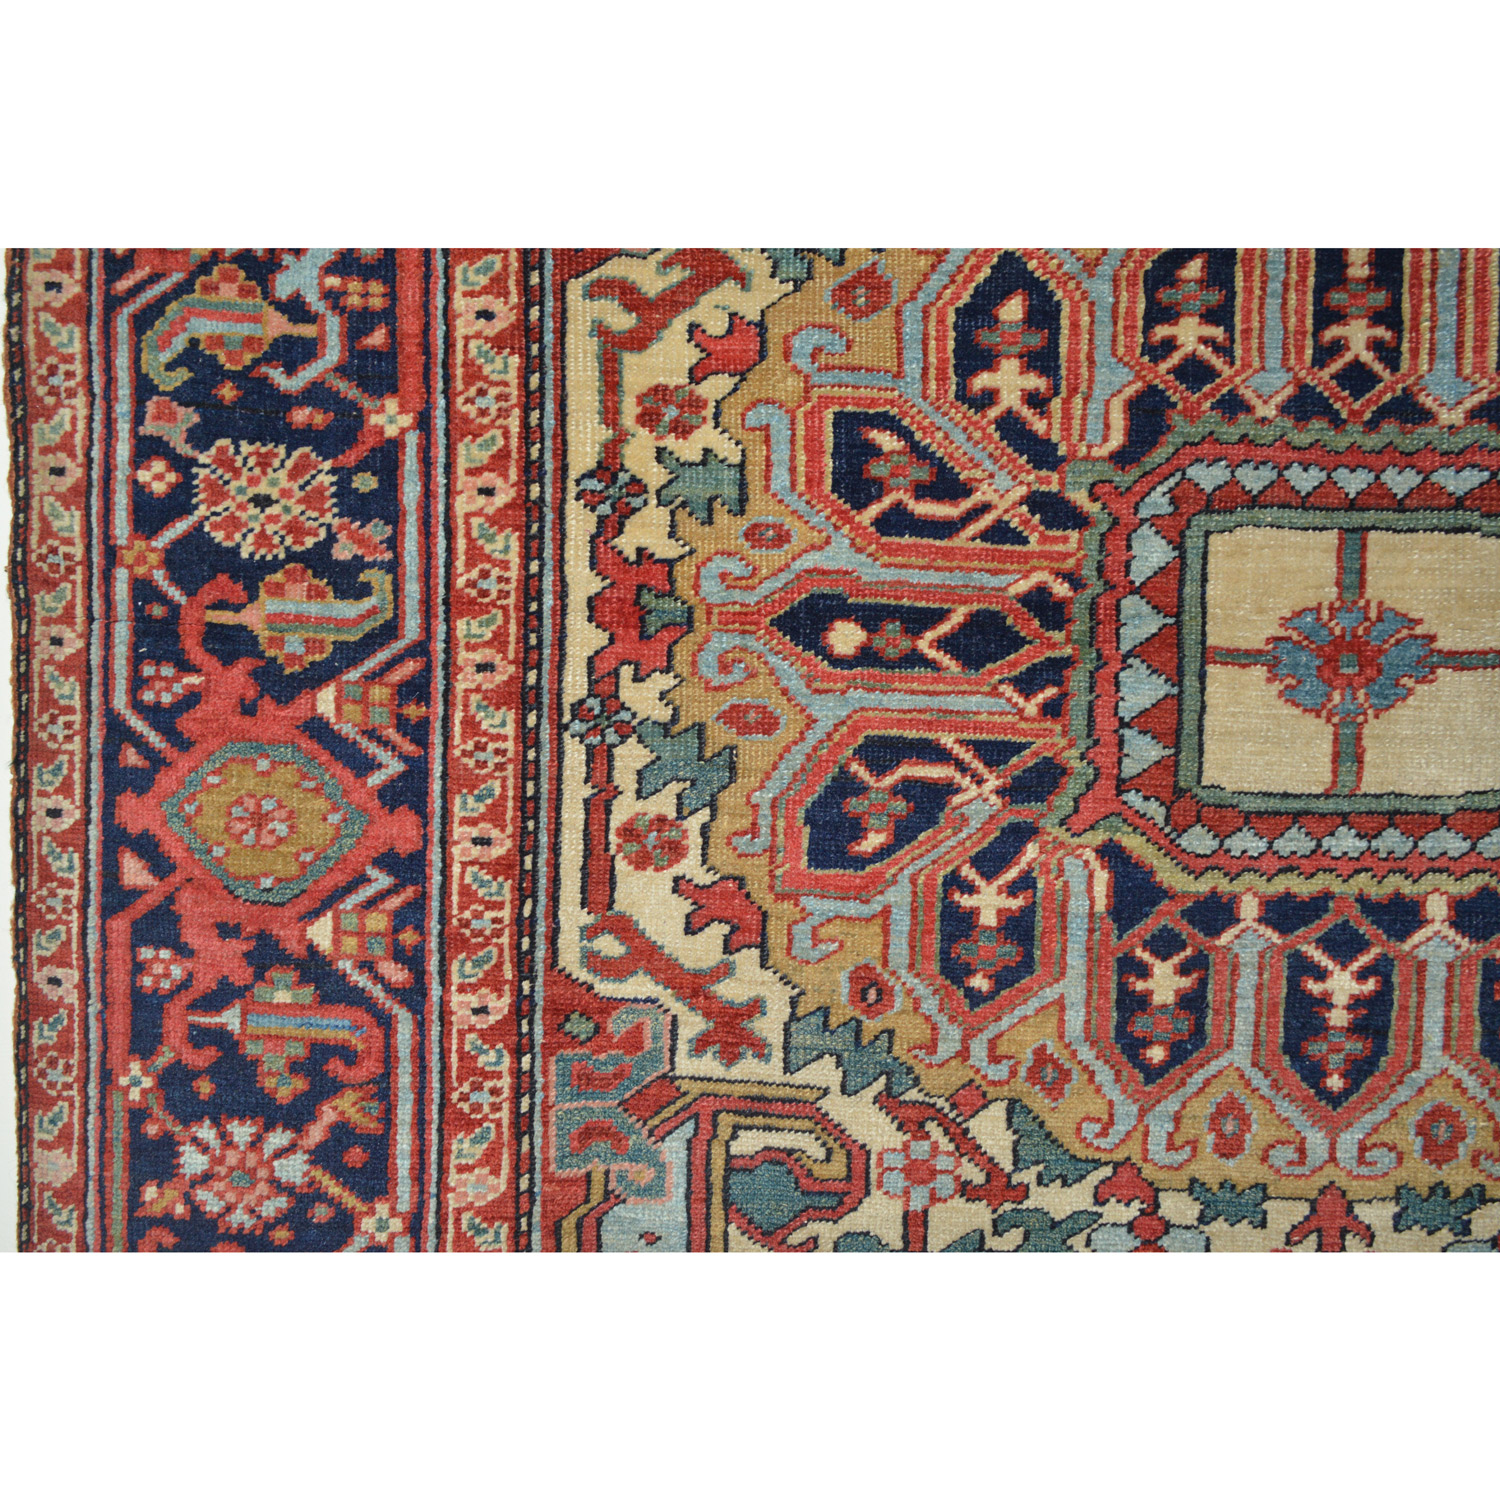 Detail of an antique Heriz Serapi rug